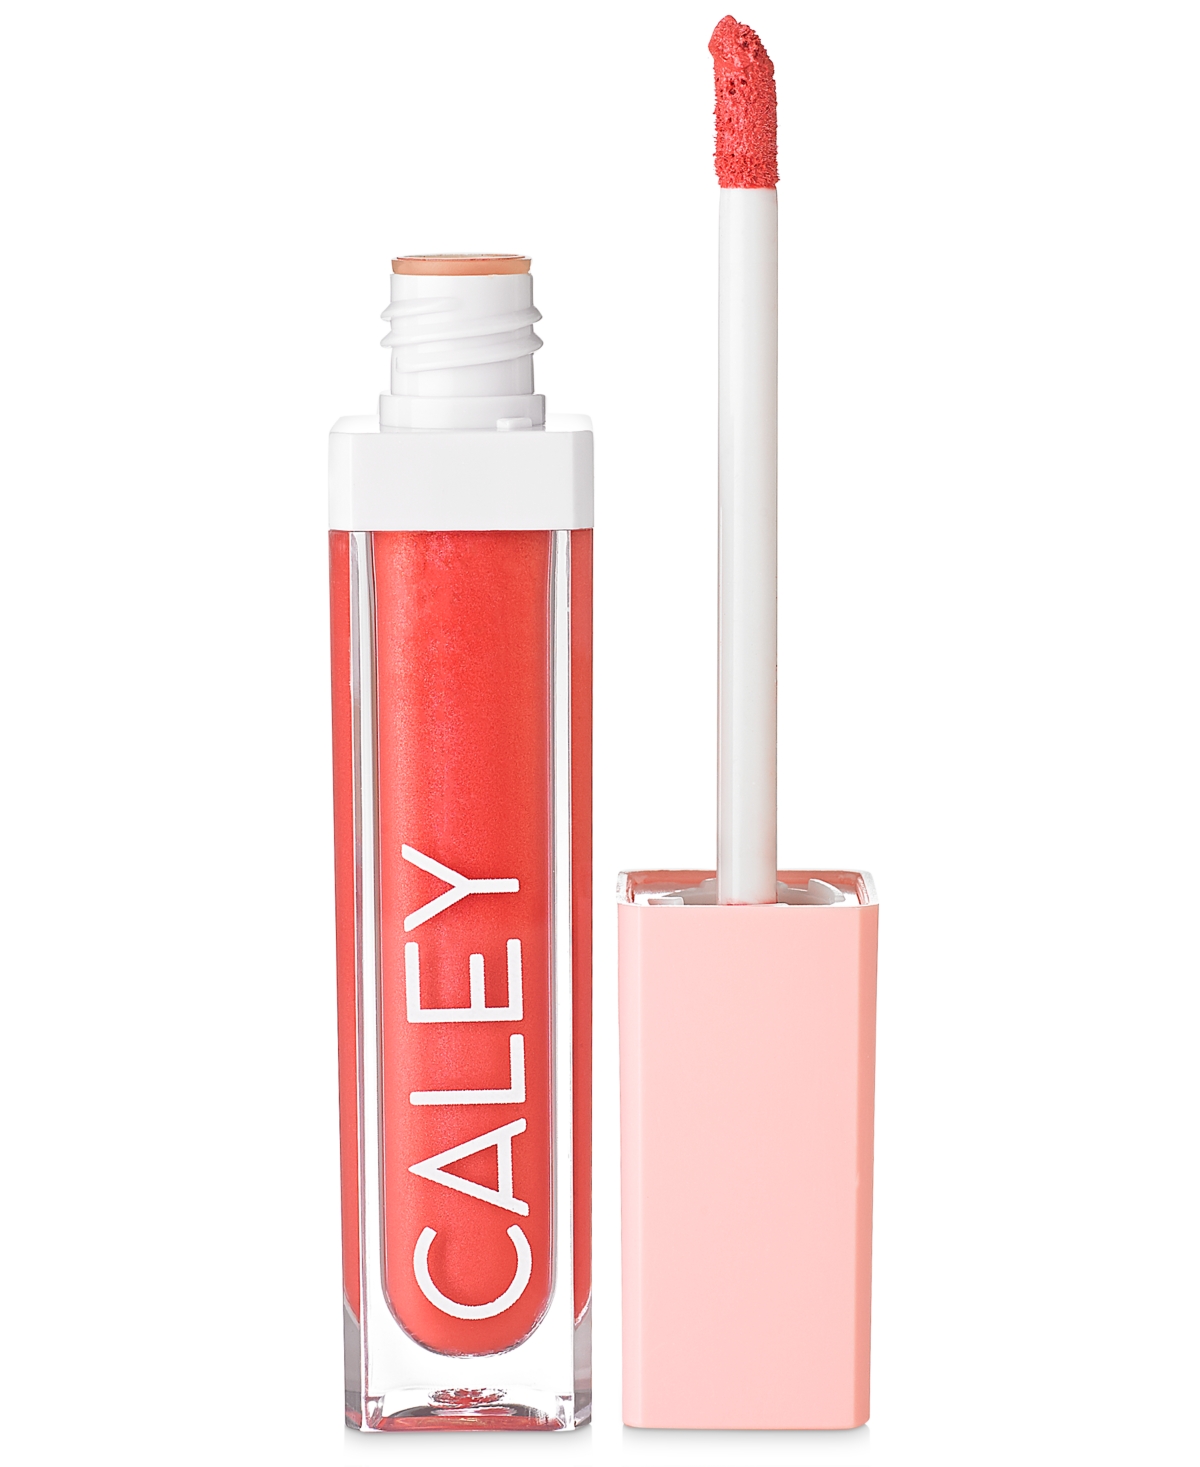 Caley Cosmetics Plumping Color Crush Natural Liquid Lip In Bright Coral